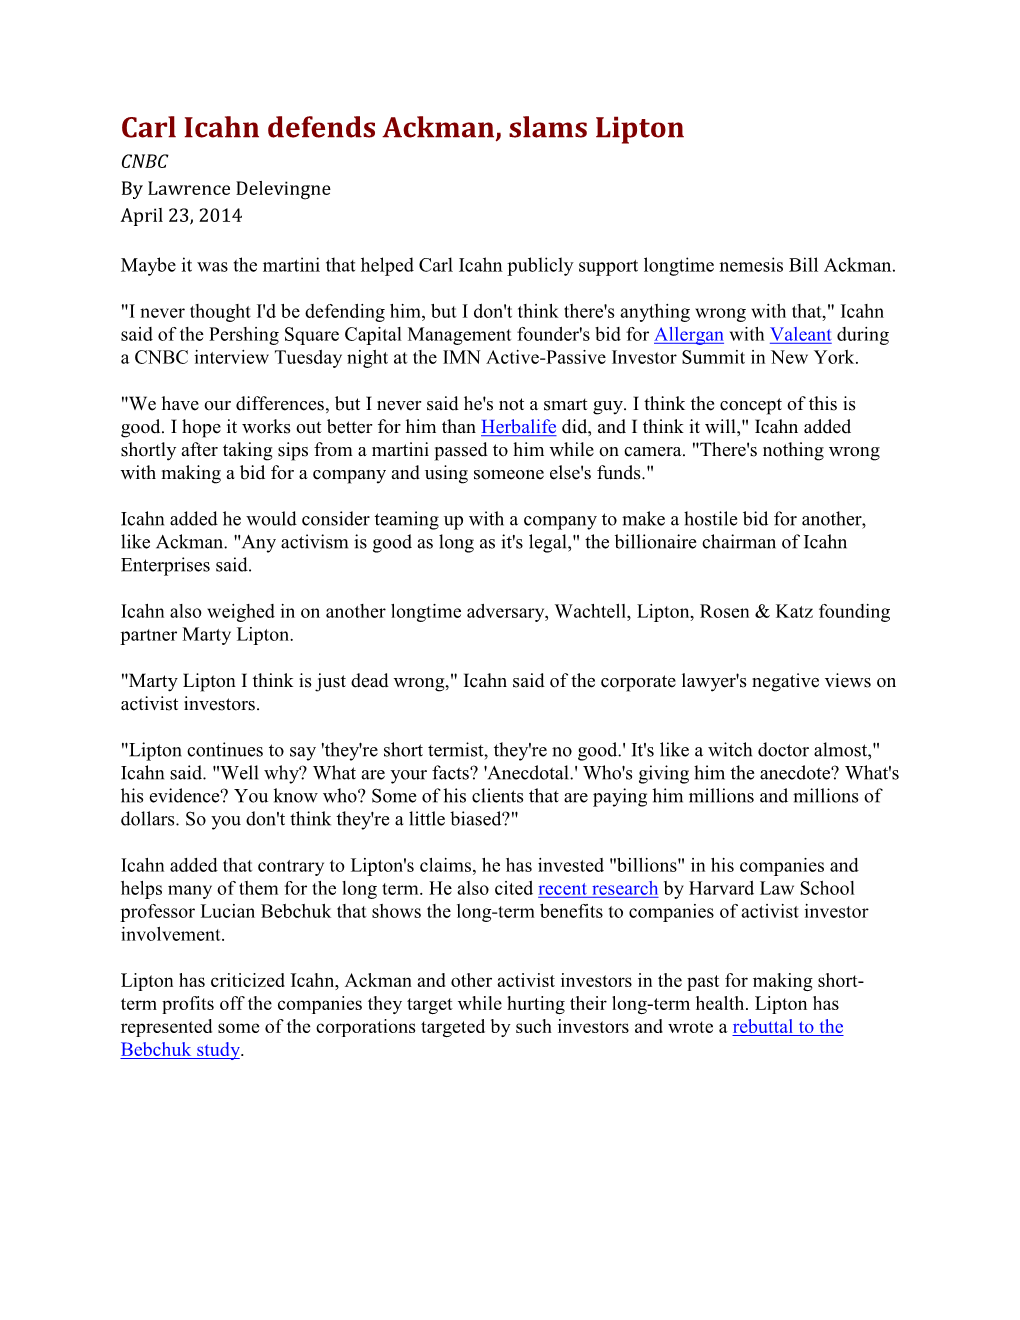 Carl Icahn Defends Ackman, Slams Lipton CNBC by Lawrence Delevingne April 23, 2014